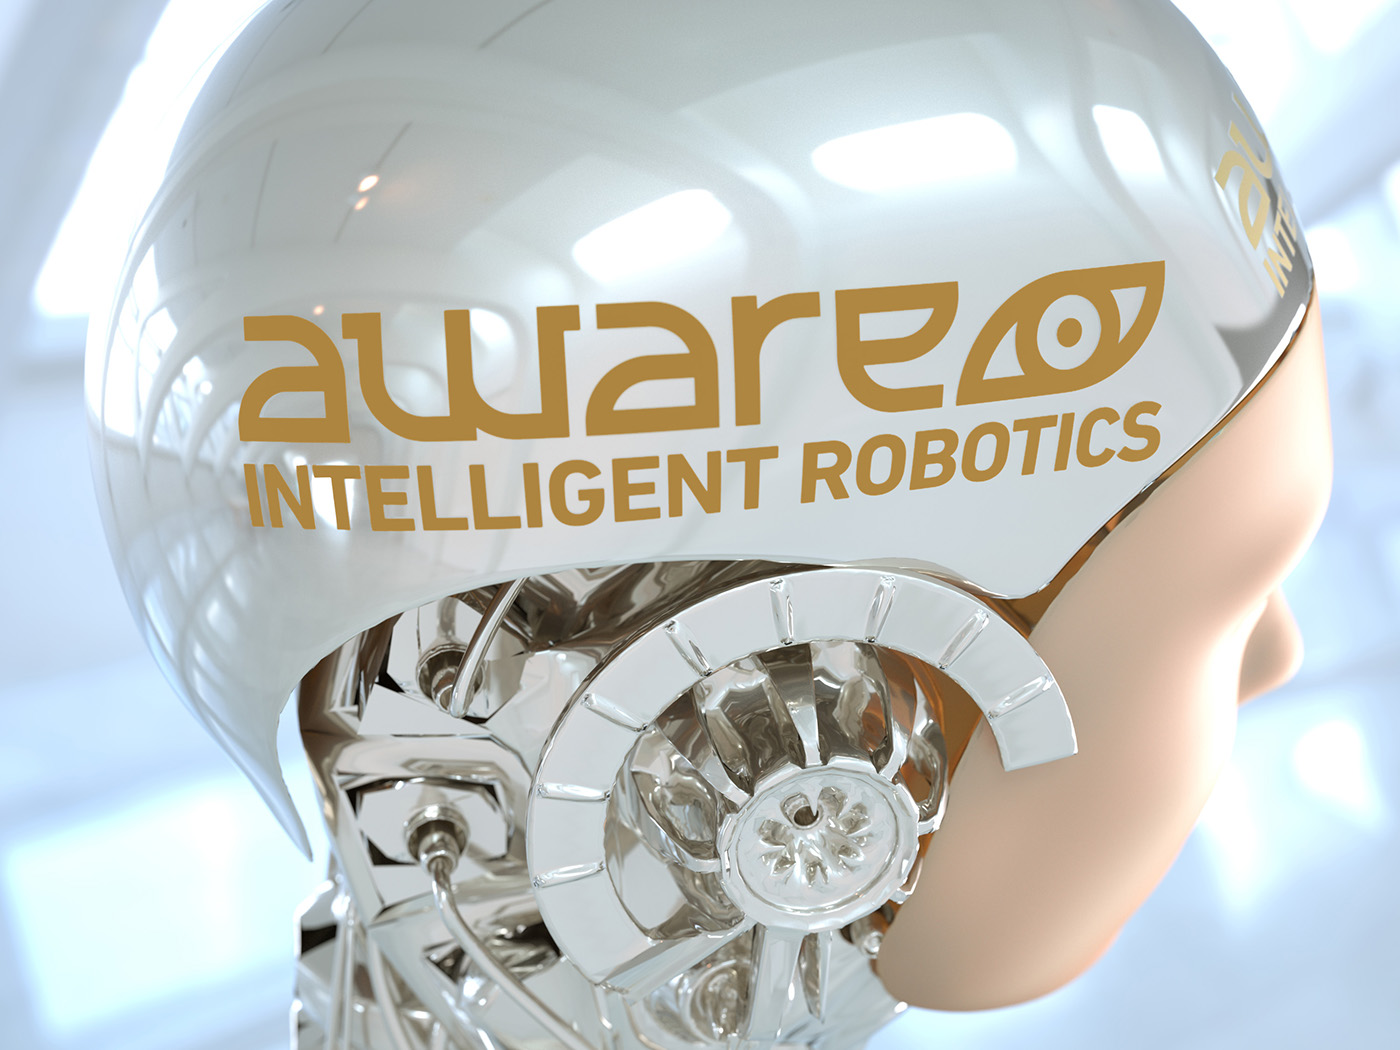 robot robotics Cyborg artificial intelligence futuristic Aware Intelligent Robotics adobe illustrator photoshop